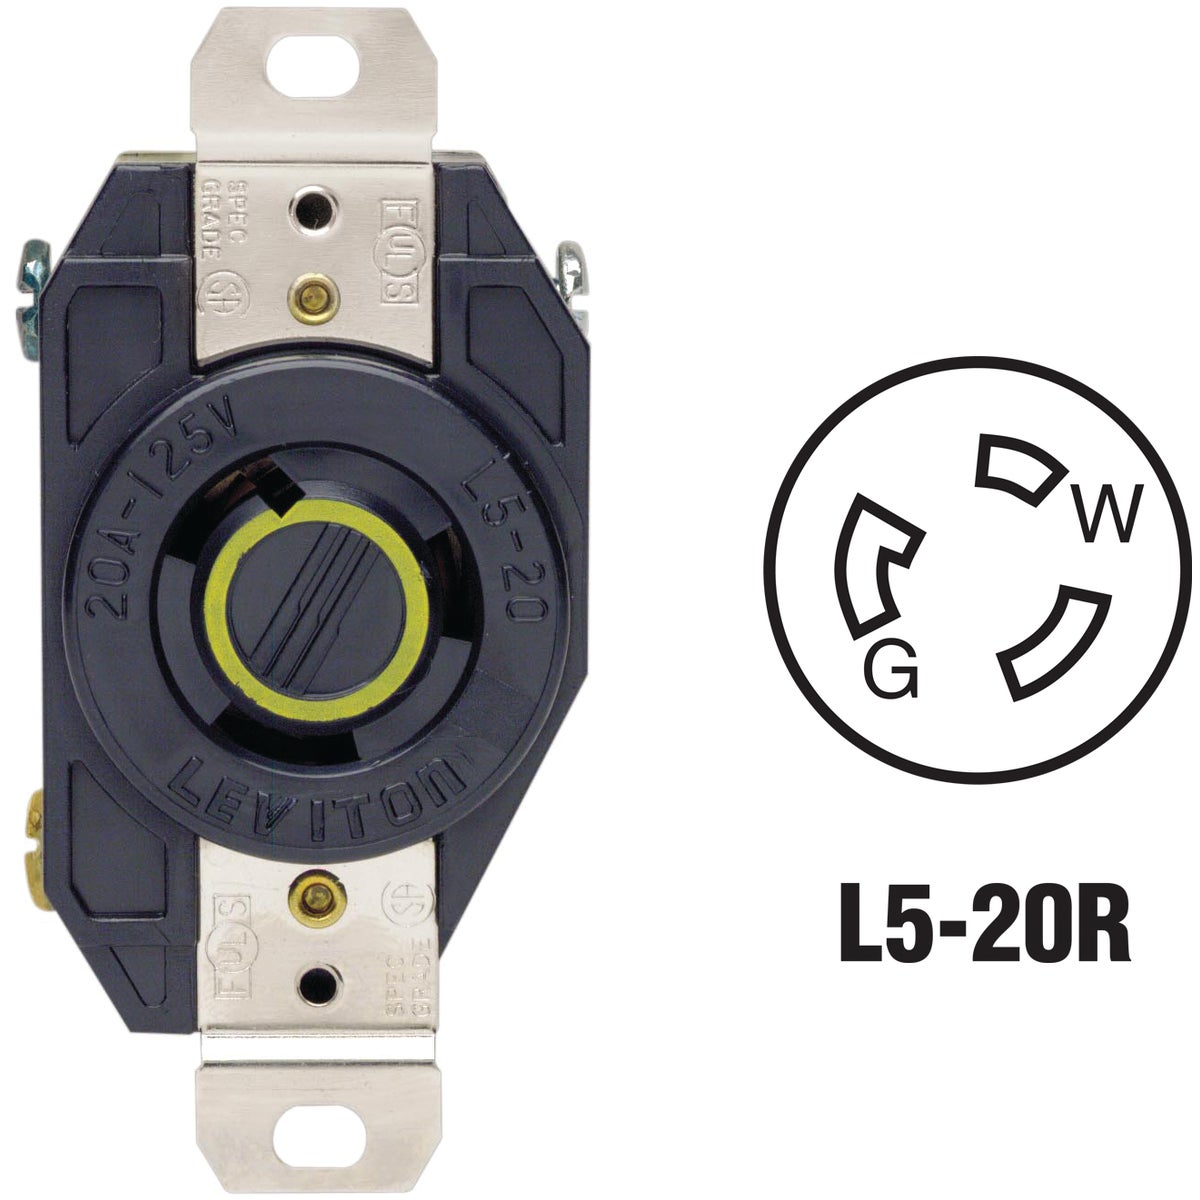 Item 501751, Industrial Specification Grade single locking flush outlet.